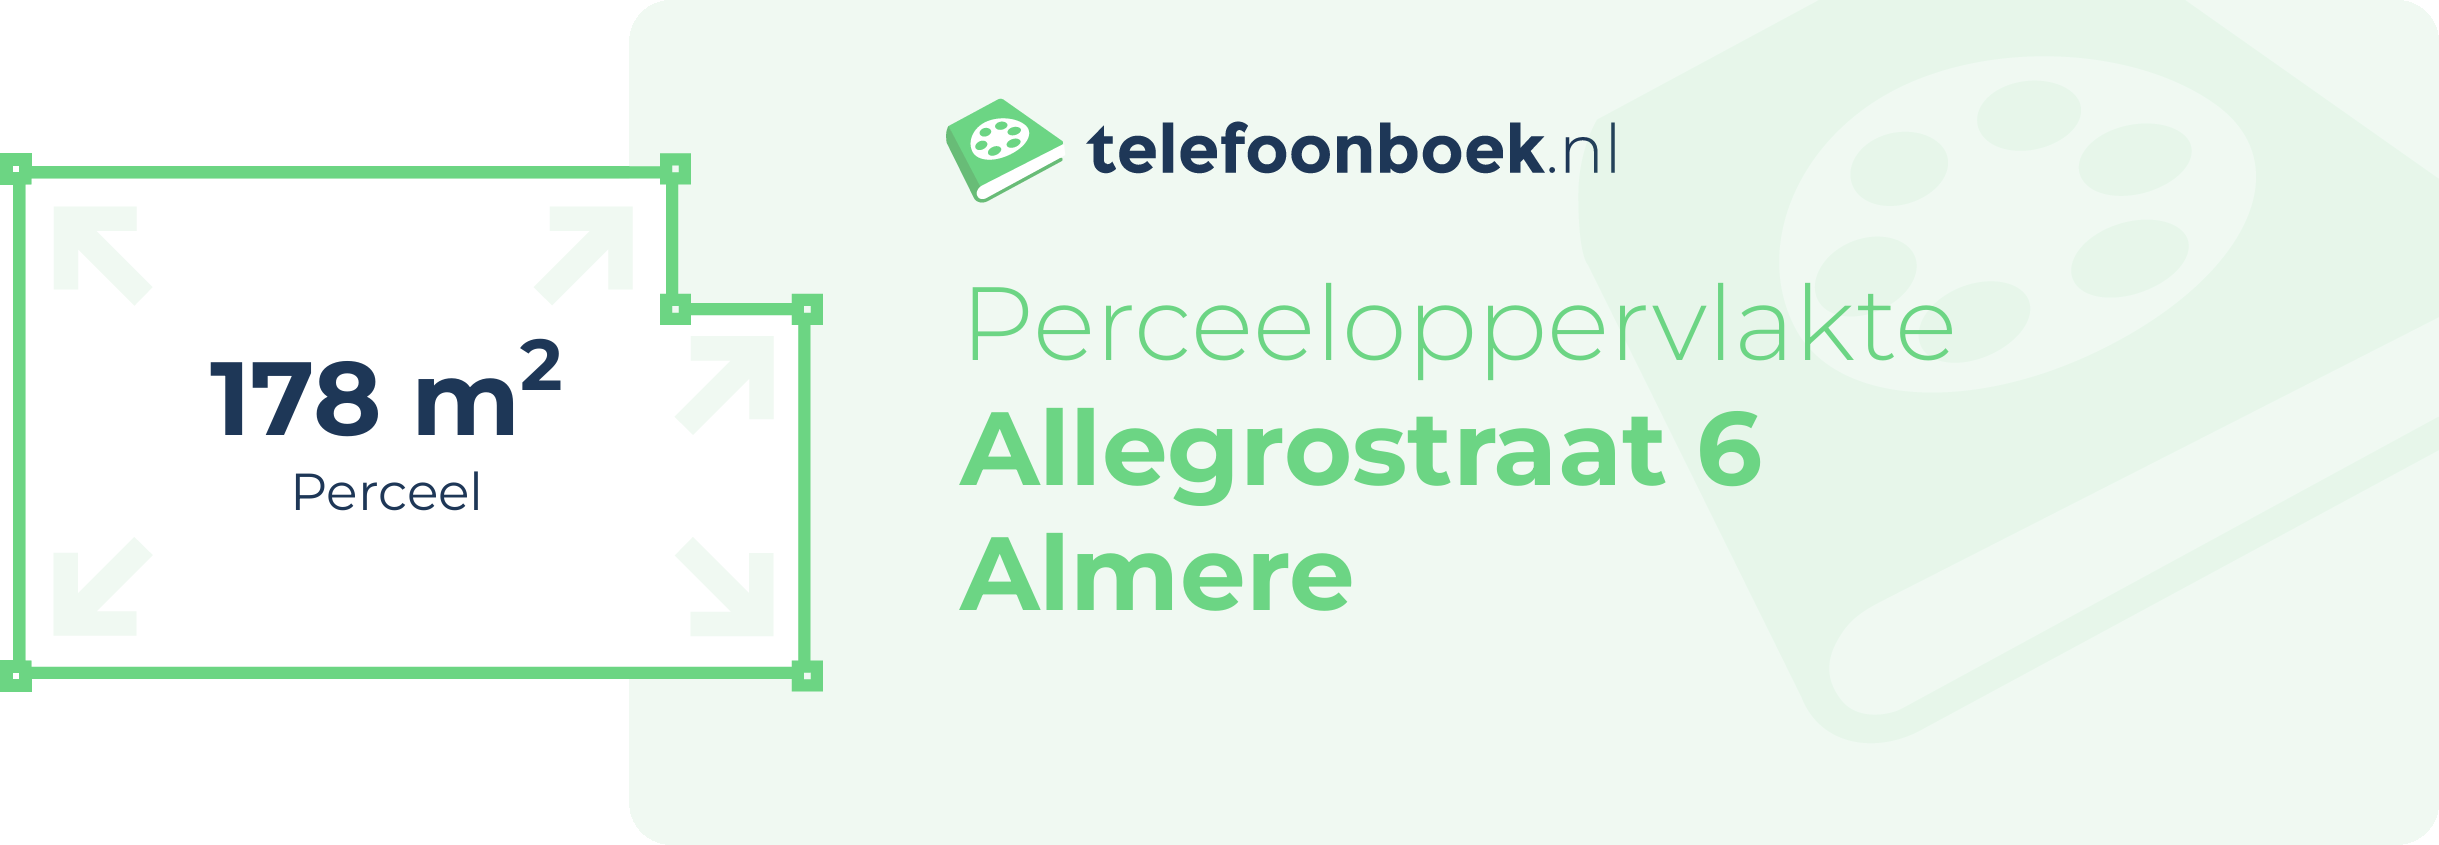 Perceeloppervlakte Allegrostraat 6 Almere